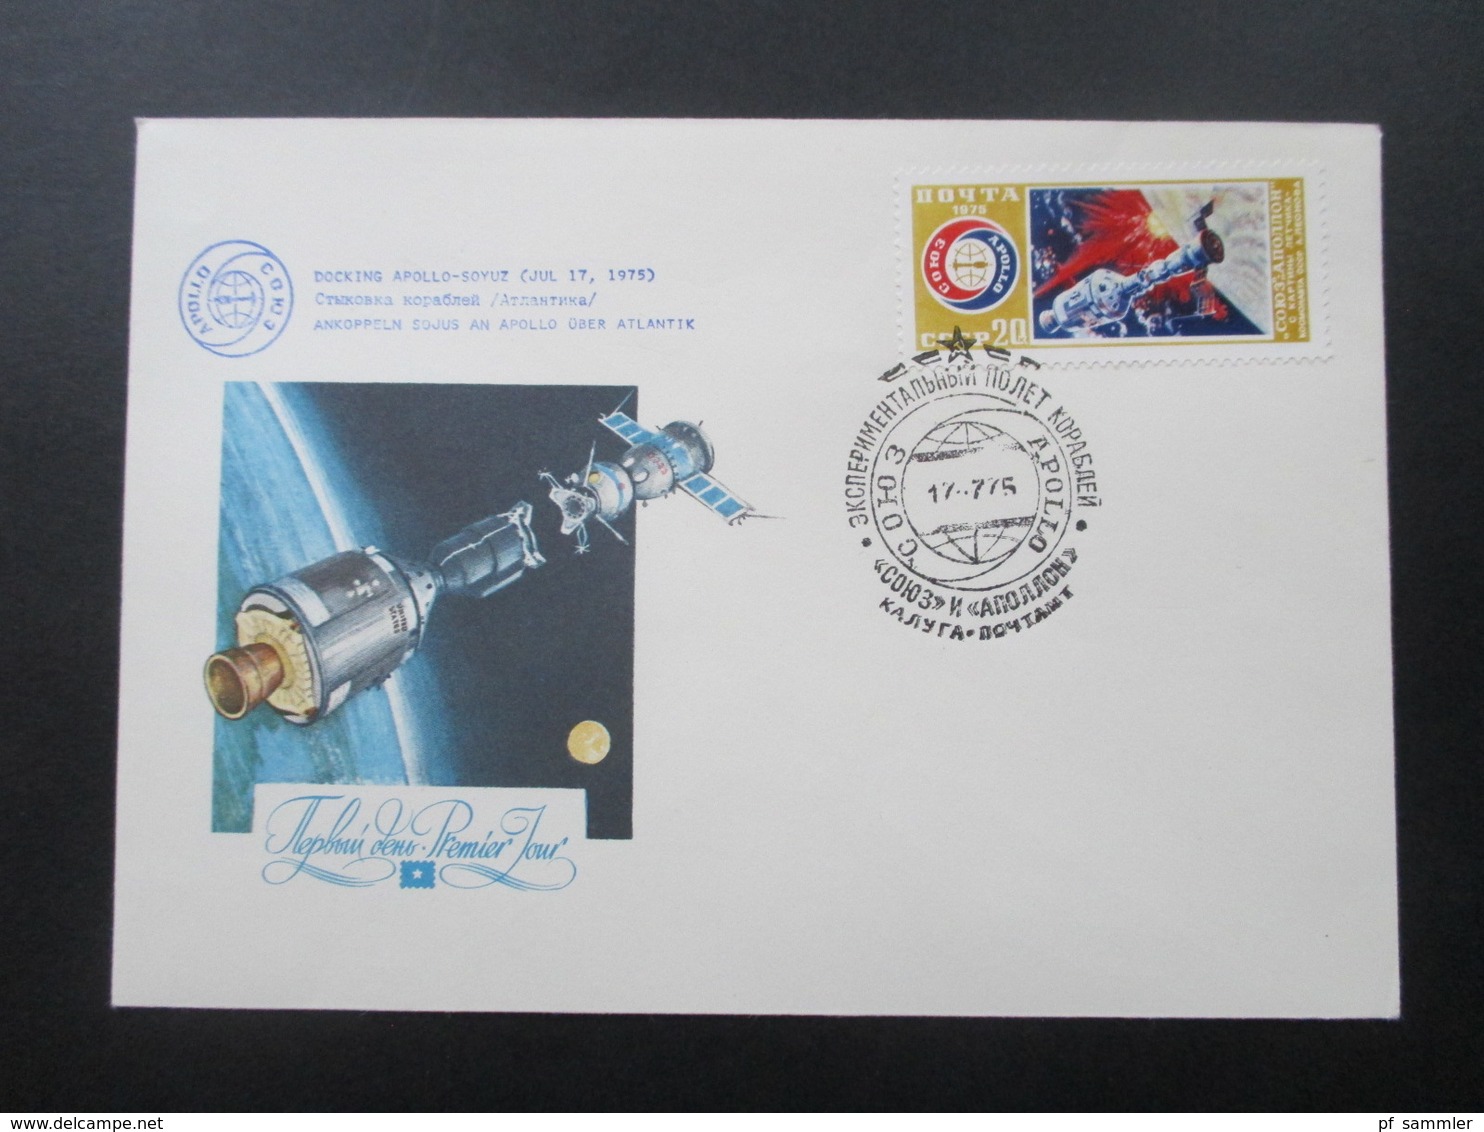 10 Sonderbelege 1975 UDSSR Raumflug Sowjets und USA Sojus Apollo mit 2 ASTP Vignetten. Raumfahrt / Weltraum